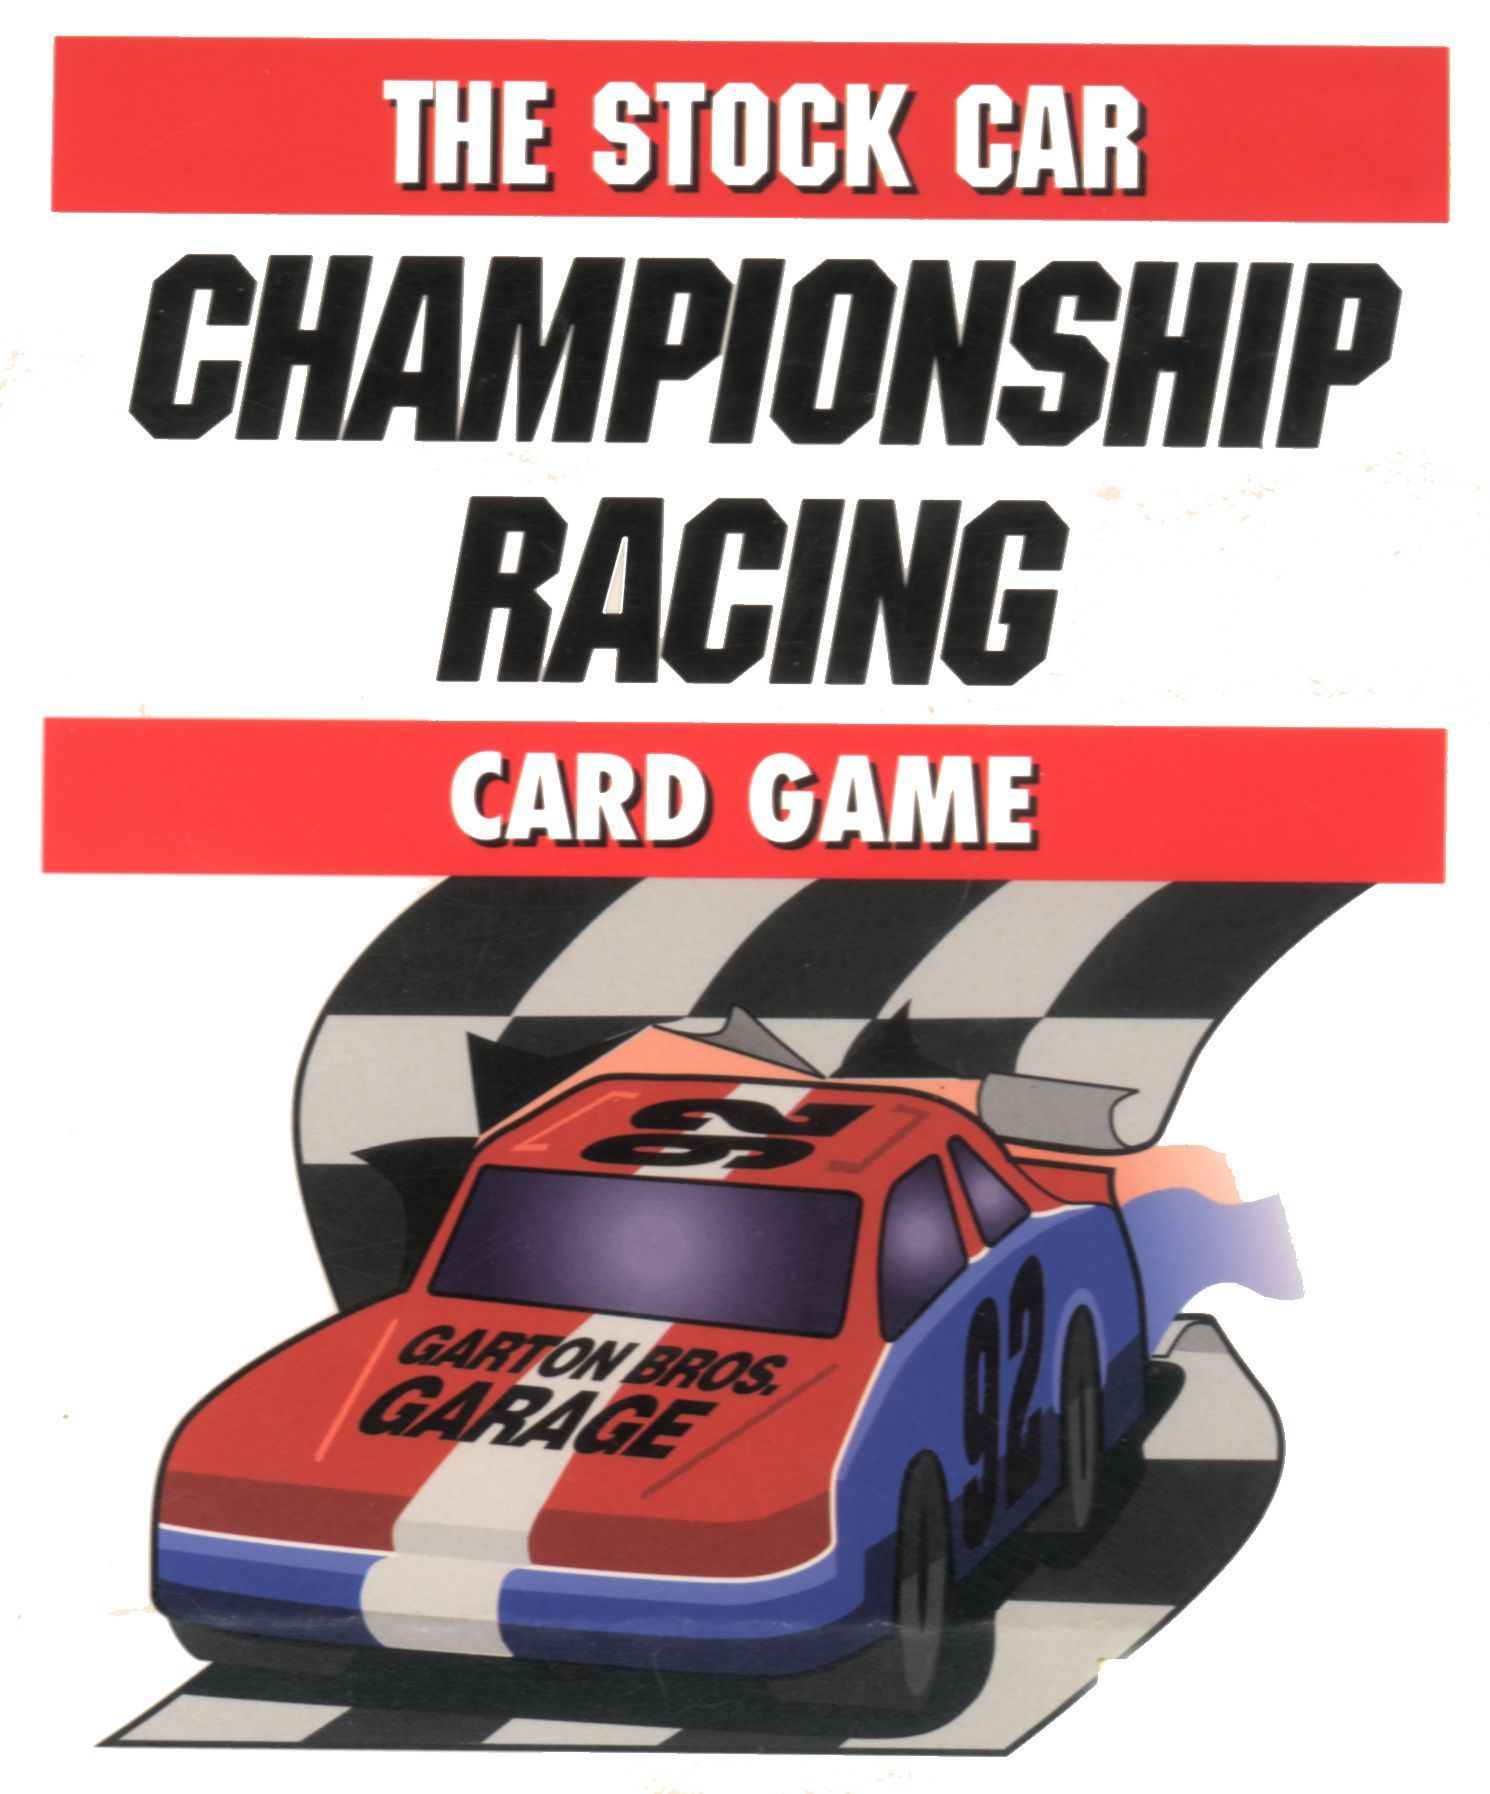 The Stock Car Championship Racing Card Game